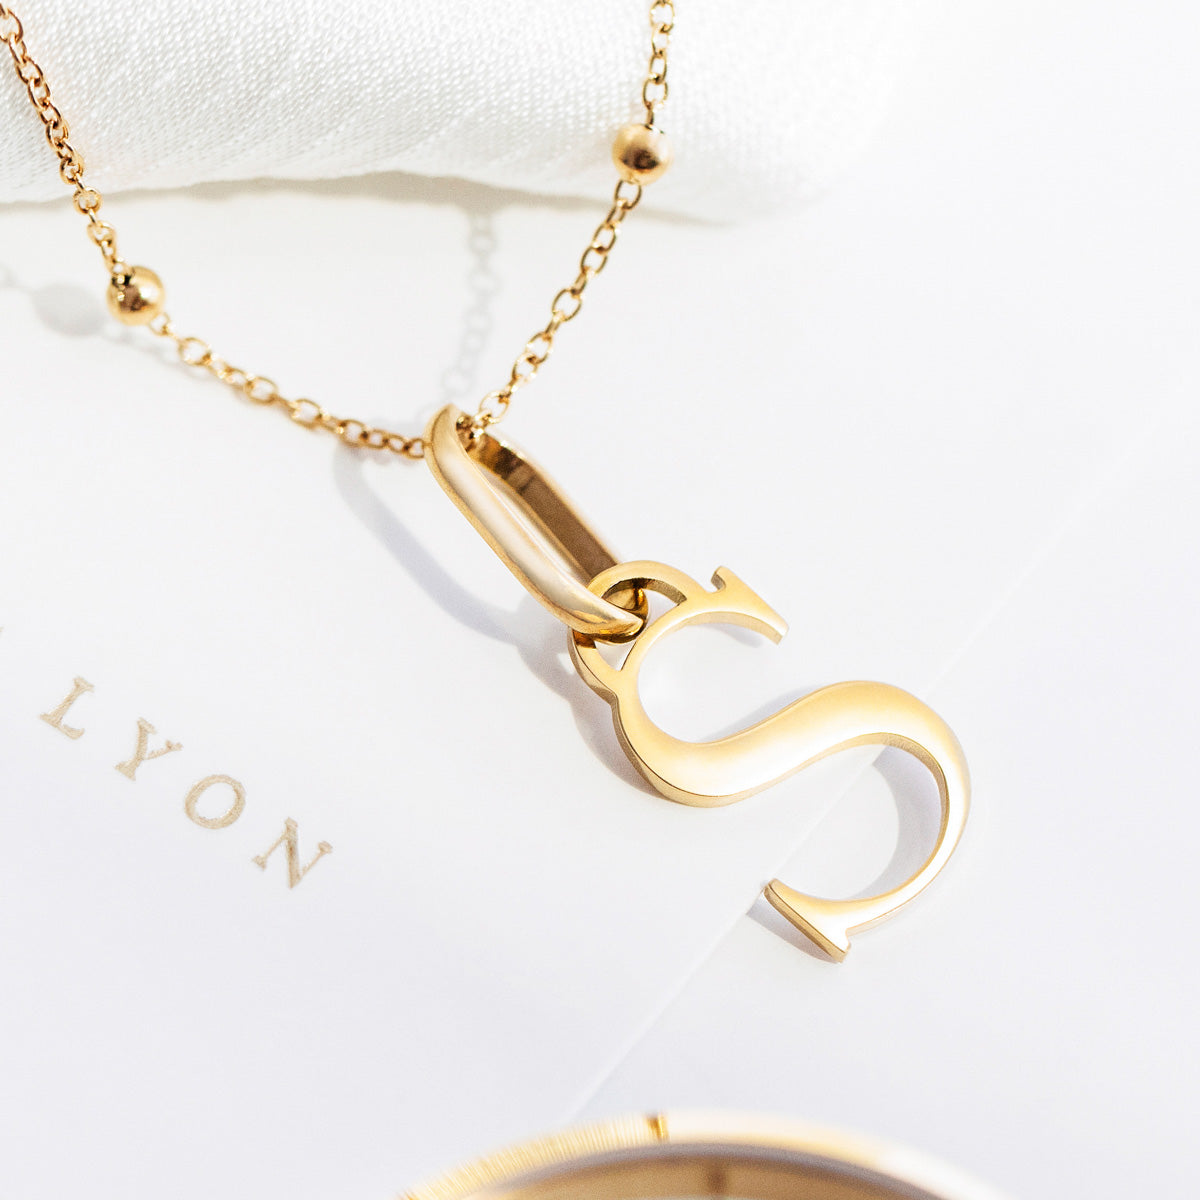 Abbott Lyon - Personalized Luxury Jewelry & Accessories